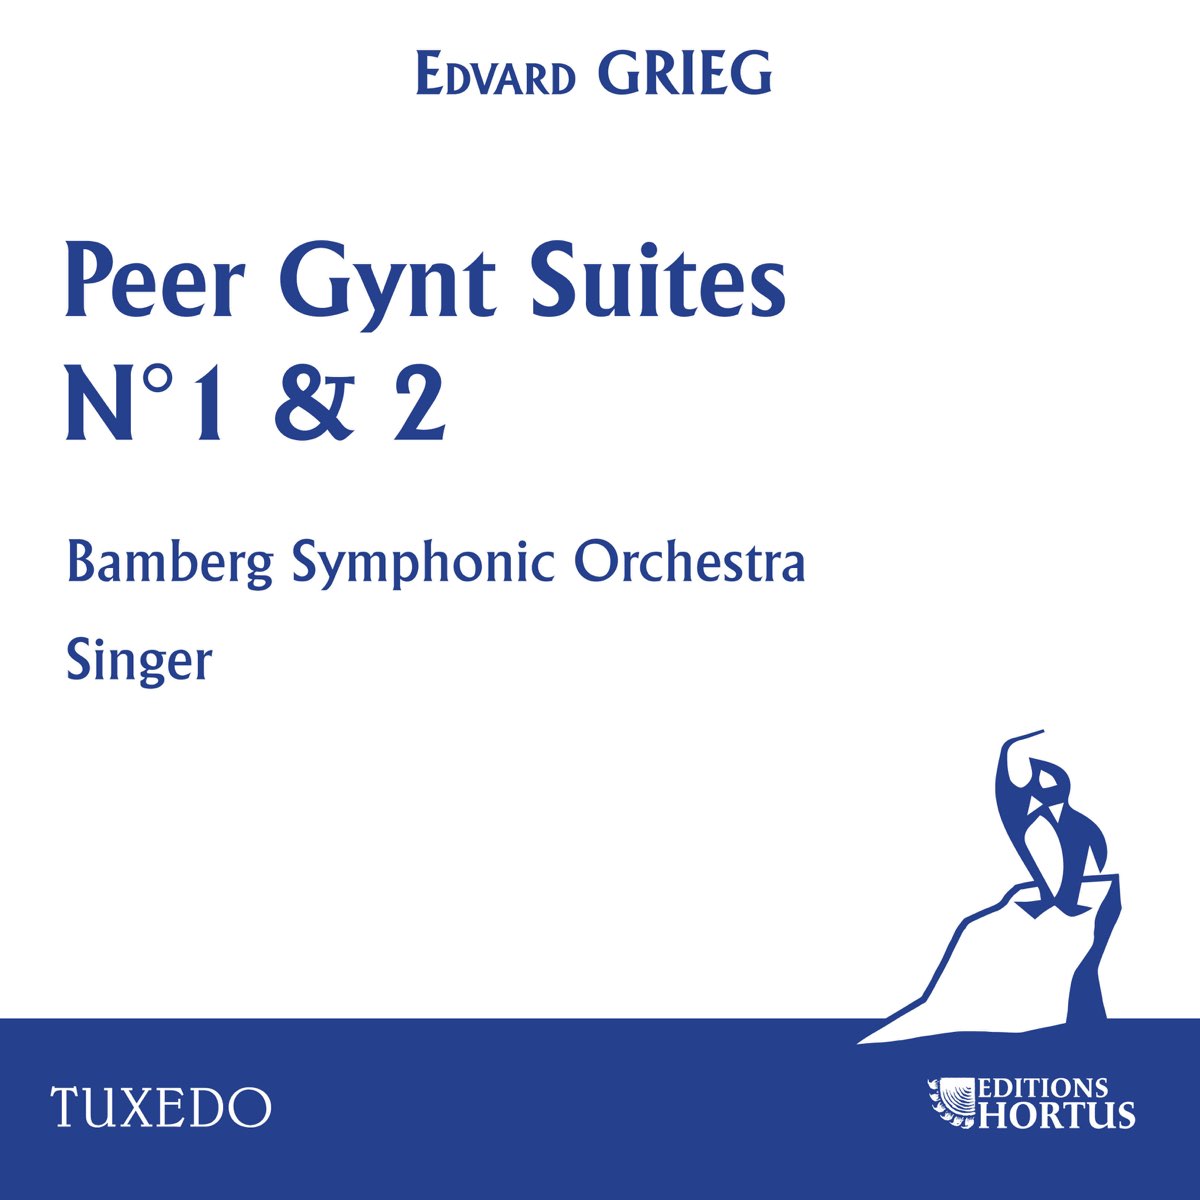 Peer gynt suite no 1. Peer Gynt Suite. Peer Gynt Suite no. 1, op. 46. Peer Gynt Suite no 1 op 46 no 4. Peer Gynt Suite no. 1, op. 46: Morning mood Либор Песек.